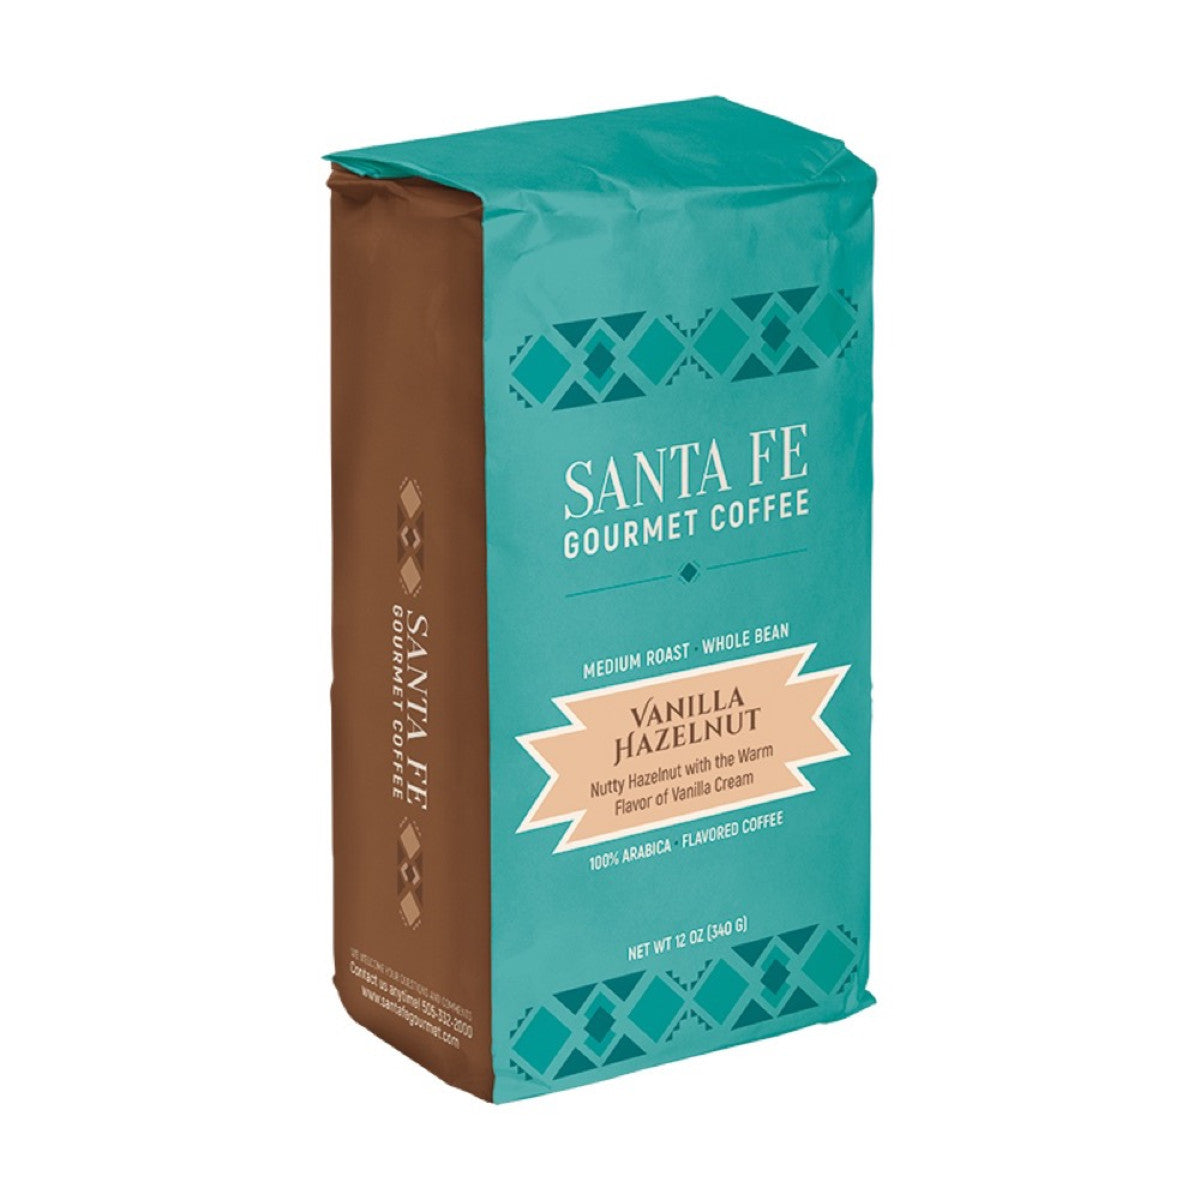 Santa Fe Gourmet Coffee - Vanilla Hazelnut - Whole Bean